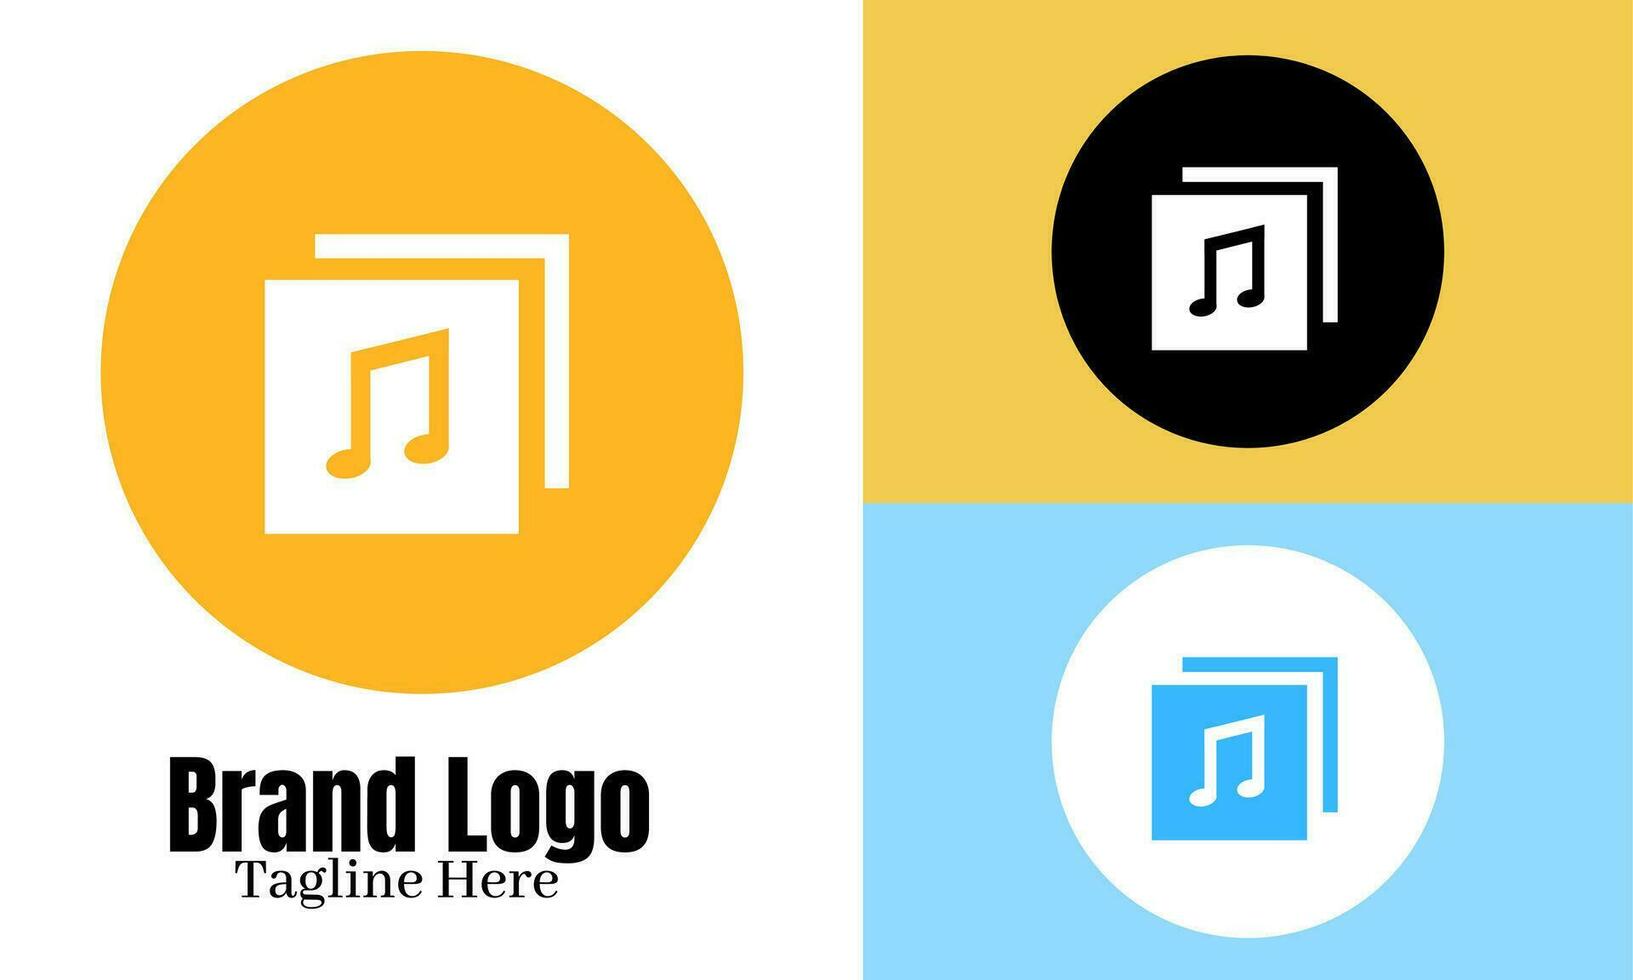 Music logo vector design illustration